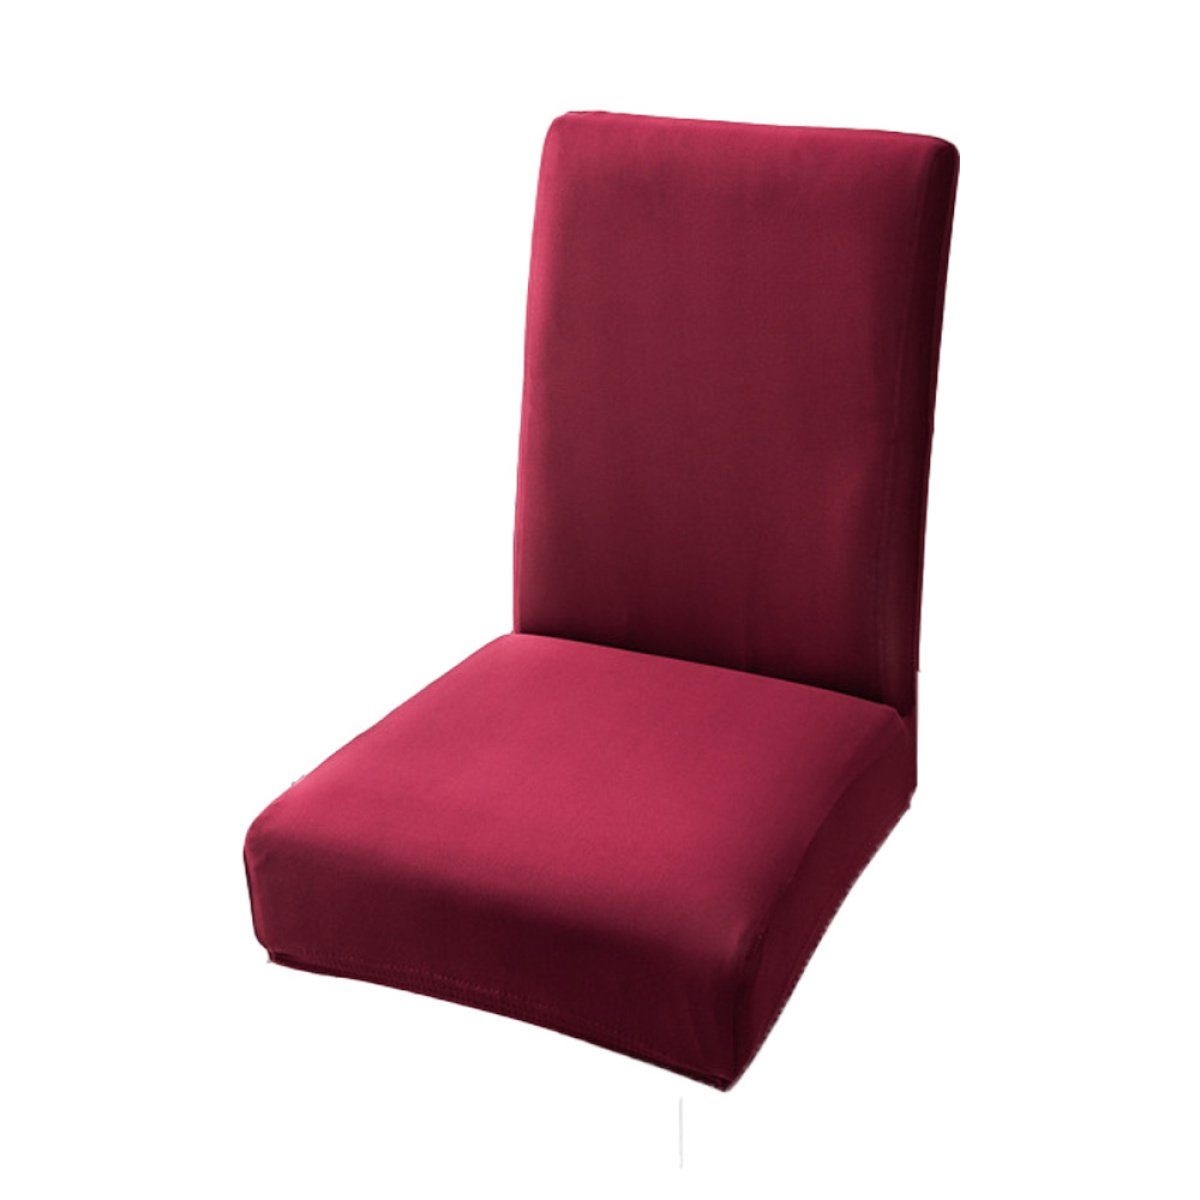 Universal Stuhlbezug Stretch Stuhlhussen für Stuhlhusse Deko, Juoungle rot Abnehmbare